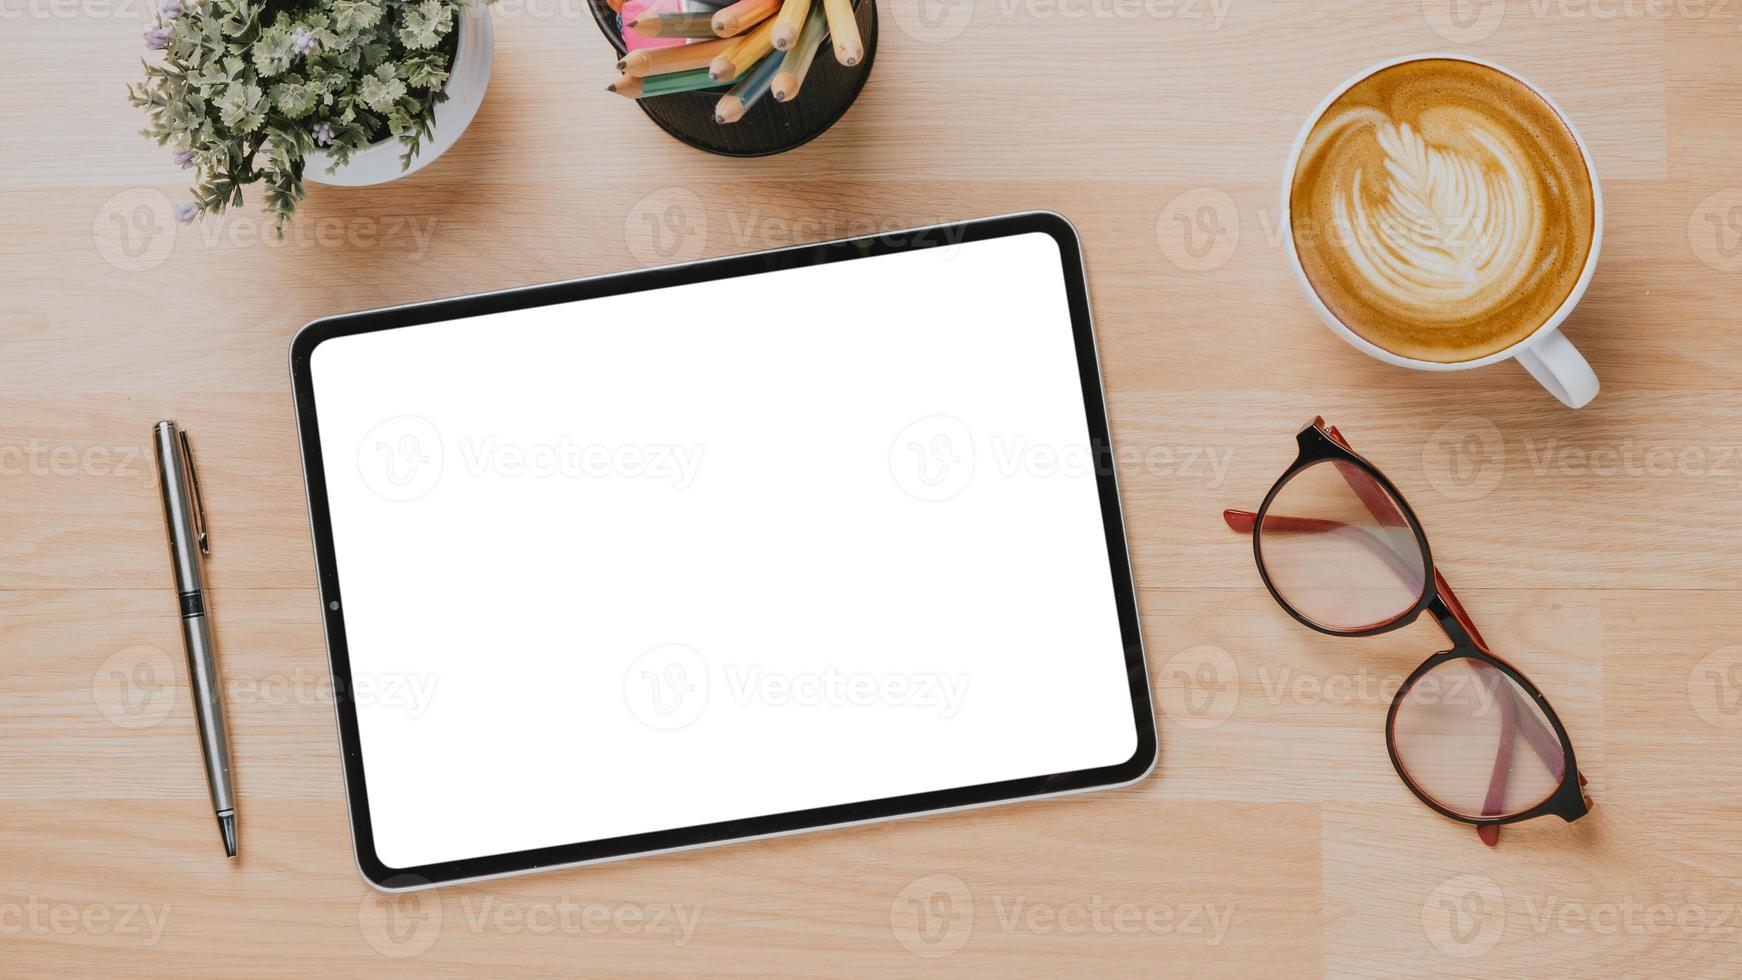 escritorio de madera de oficina con tableta de pantalla en blanco, bolígrafo, anteojos y taza de café, vista superior flay lay. foto